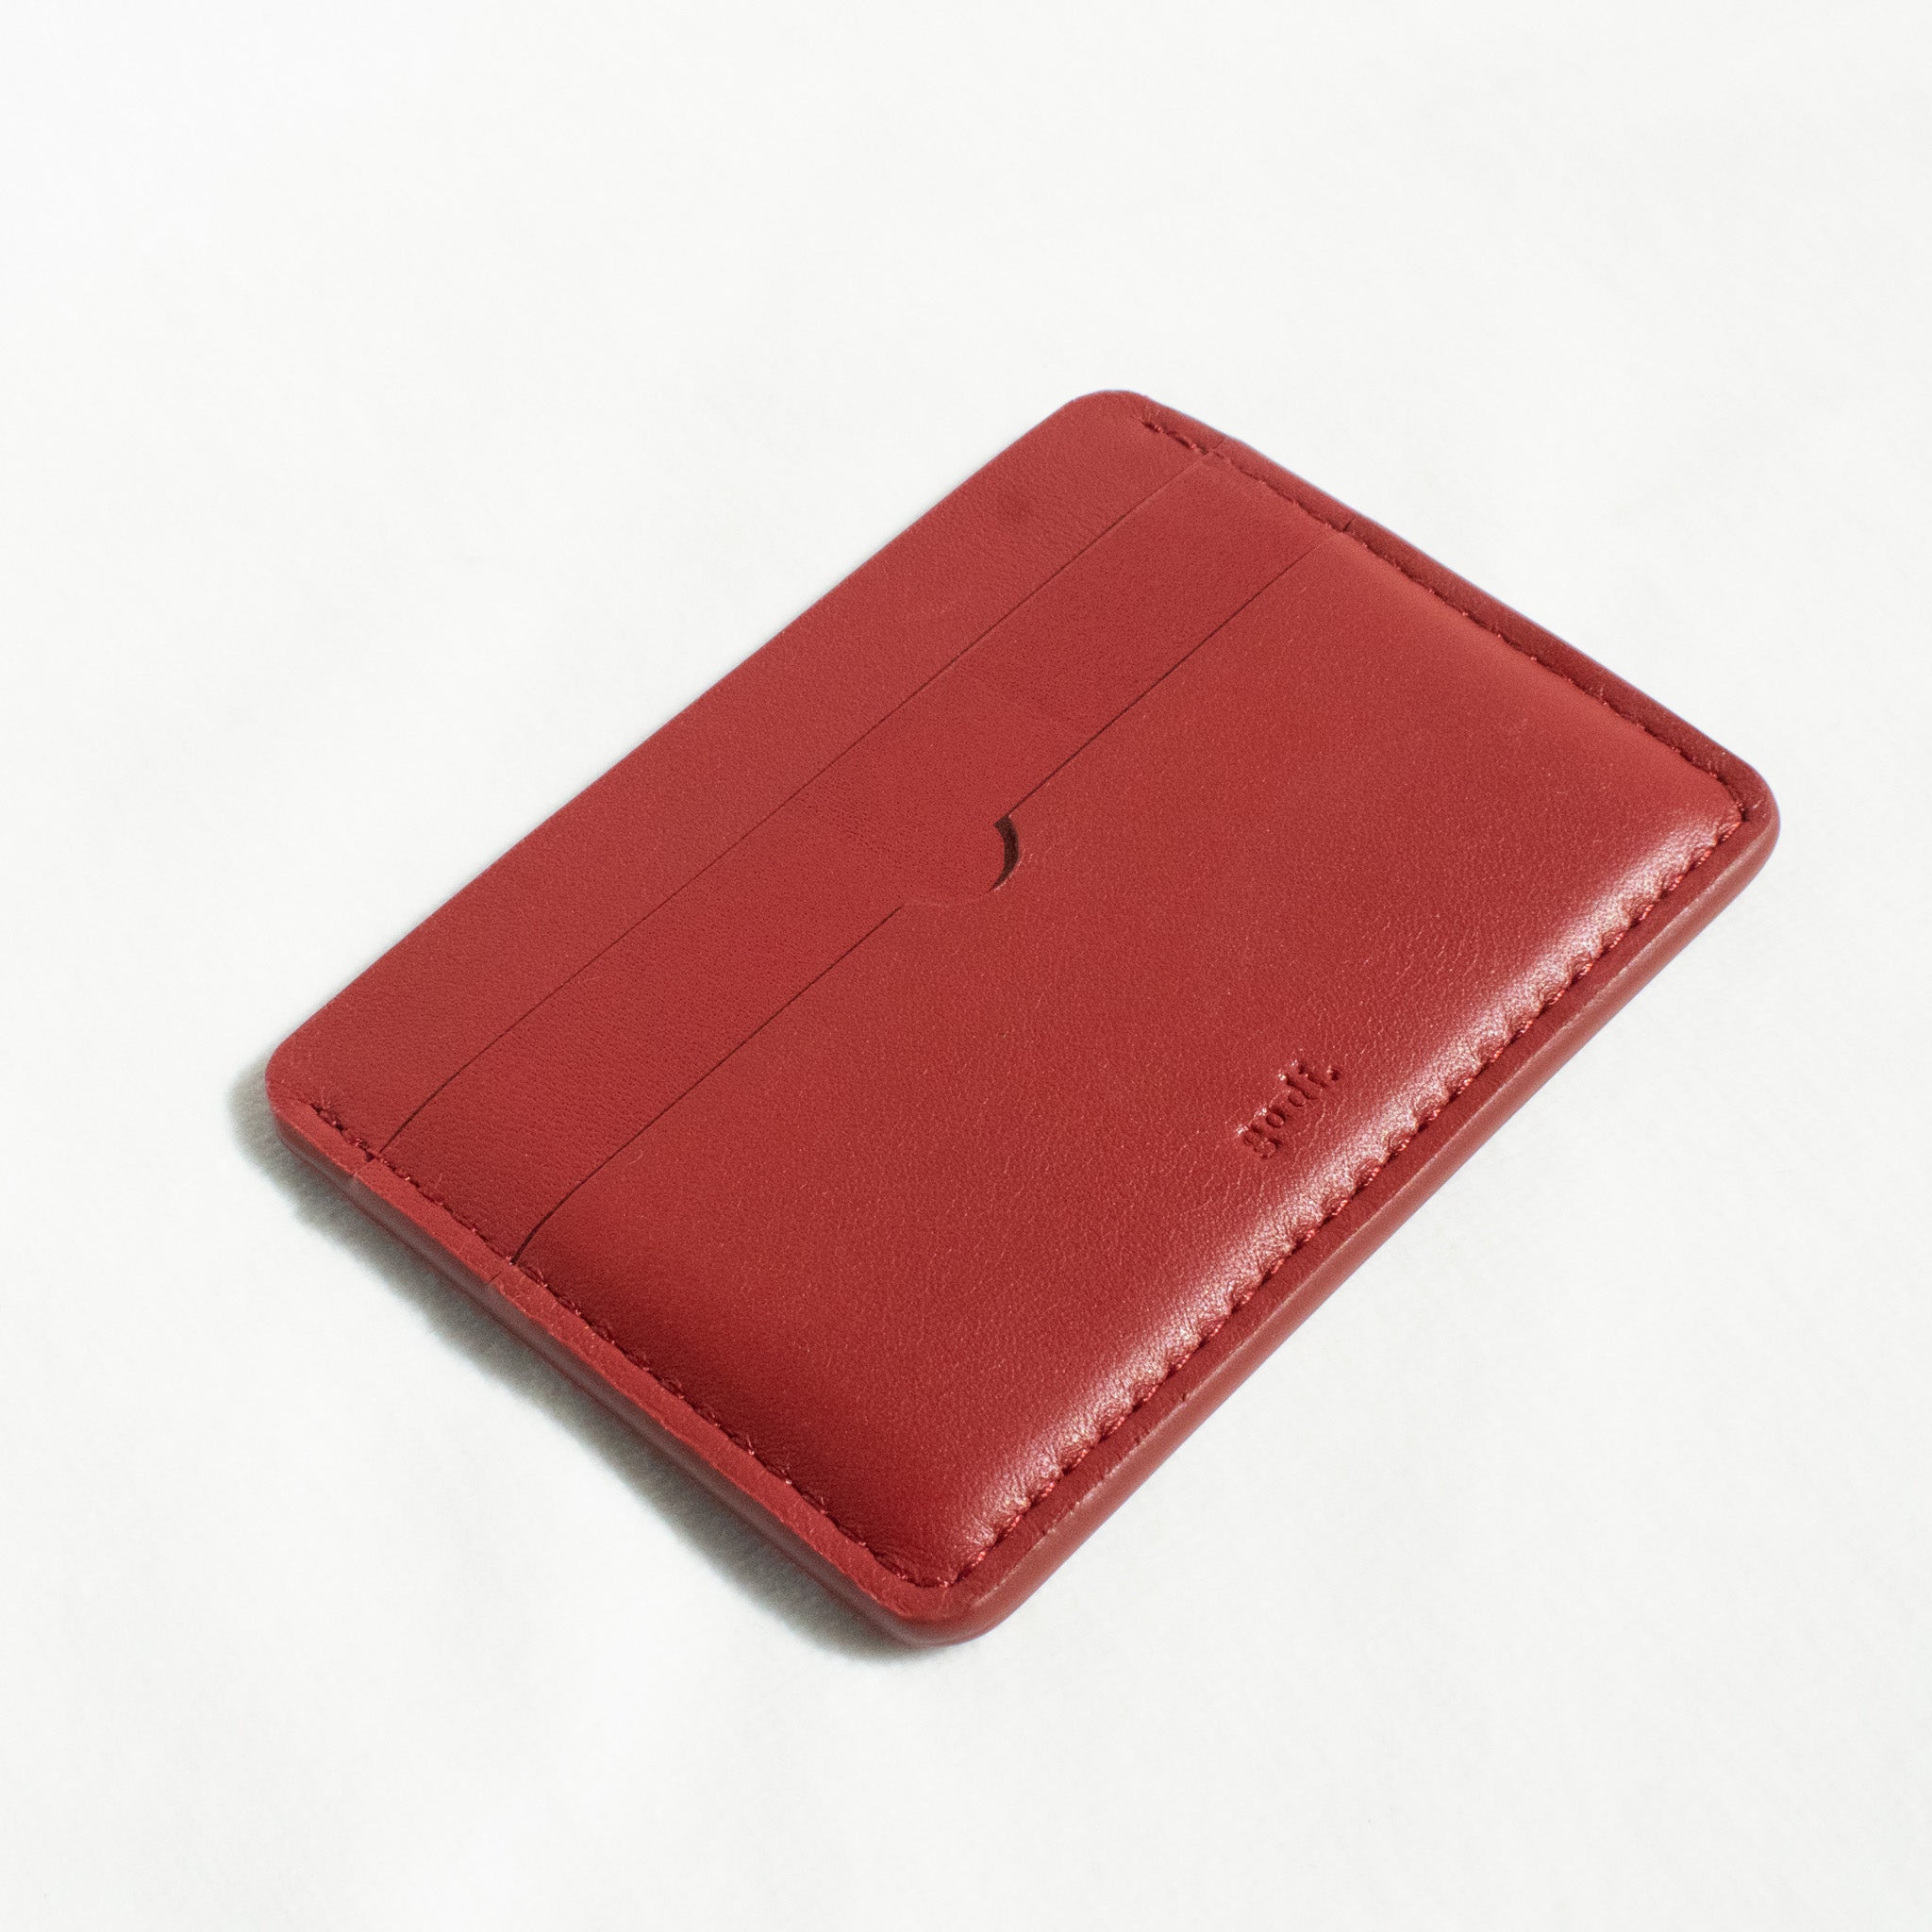 Card Case in Scarlet Red